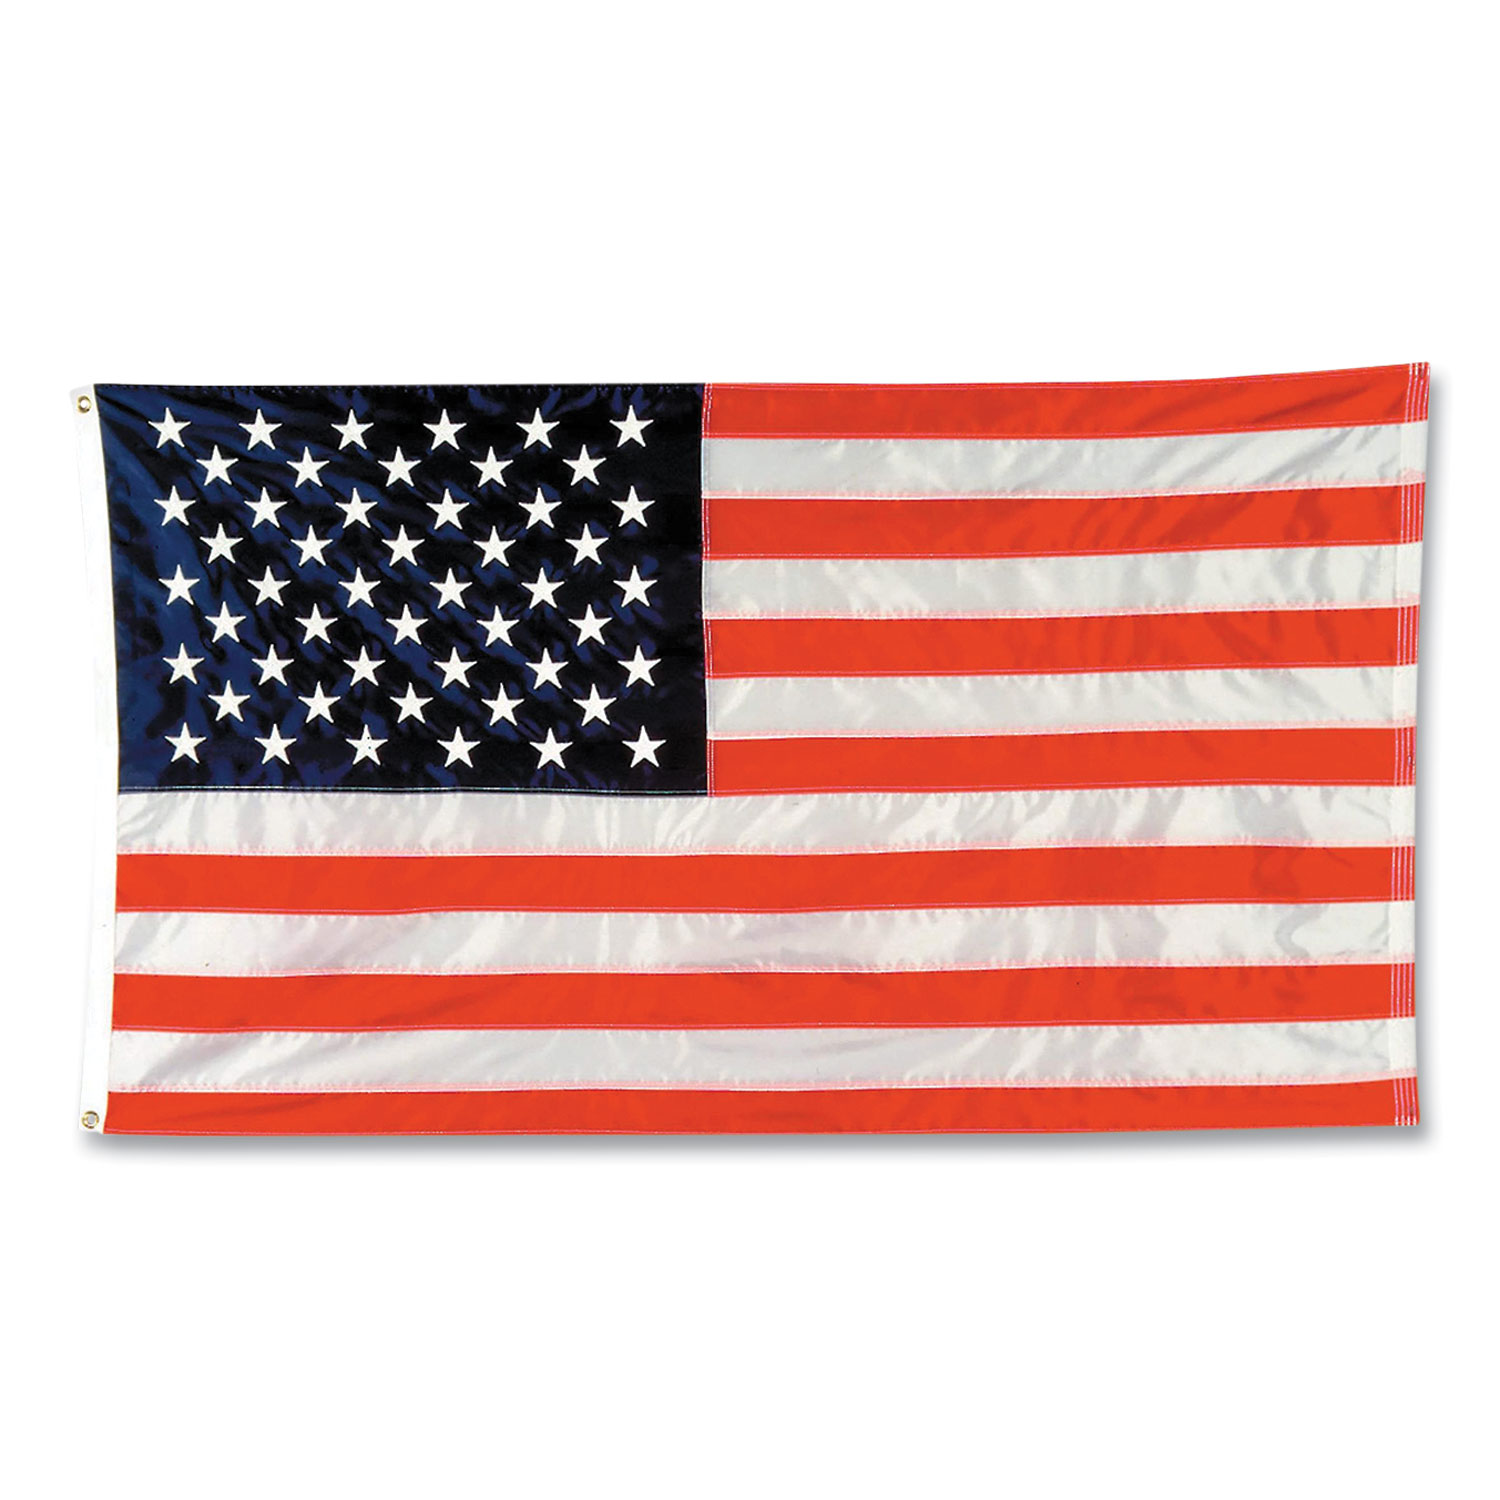  Integrity Flags BAUTB5800 Indoor/Outdoor U.S. Flag, Nylon, 8 ft x 5 ft (BAU458151) 